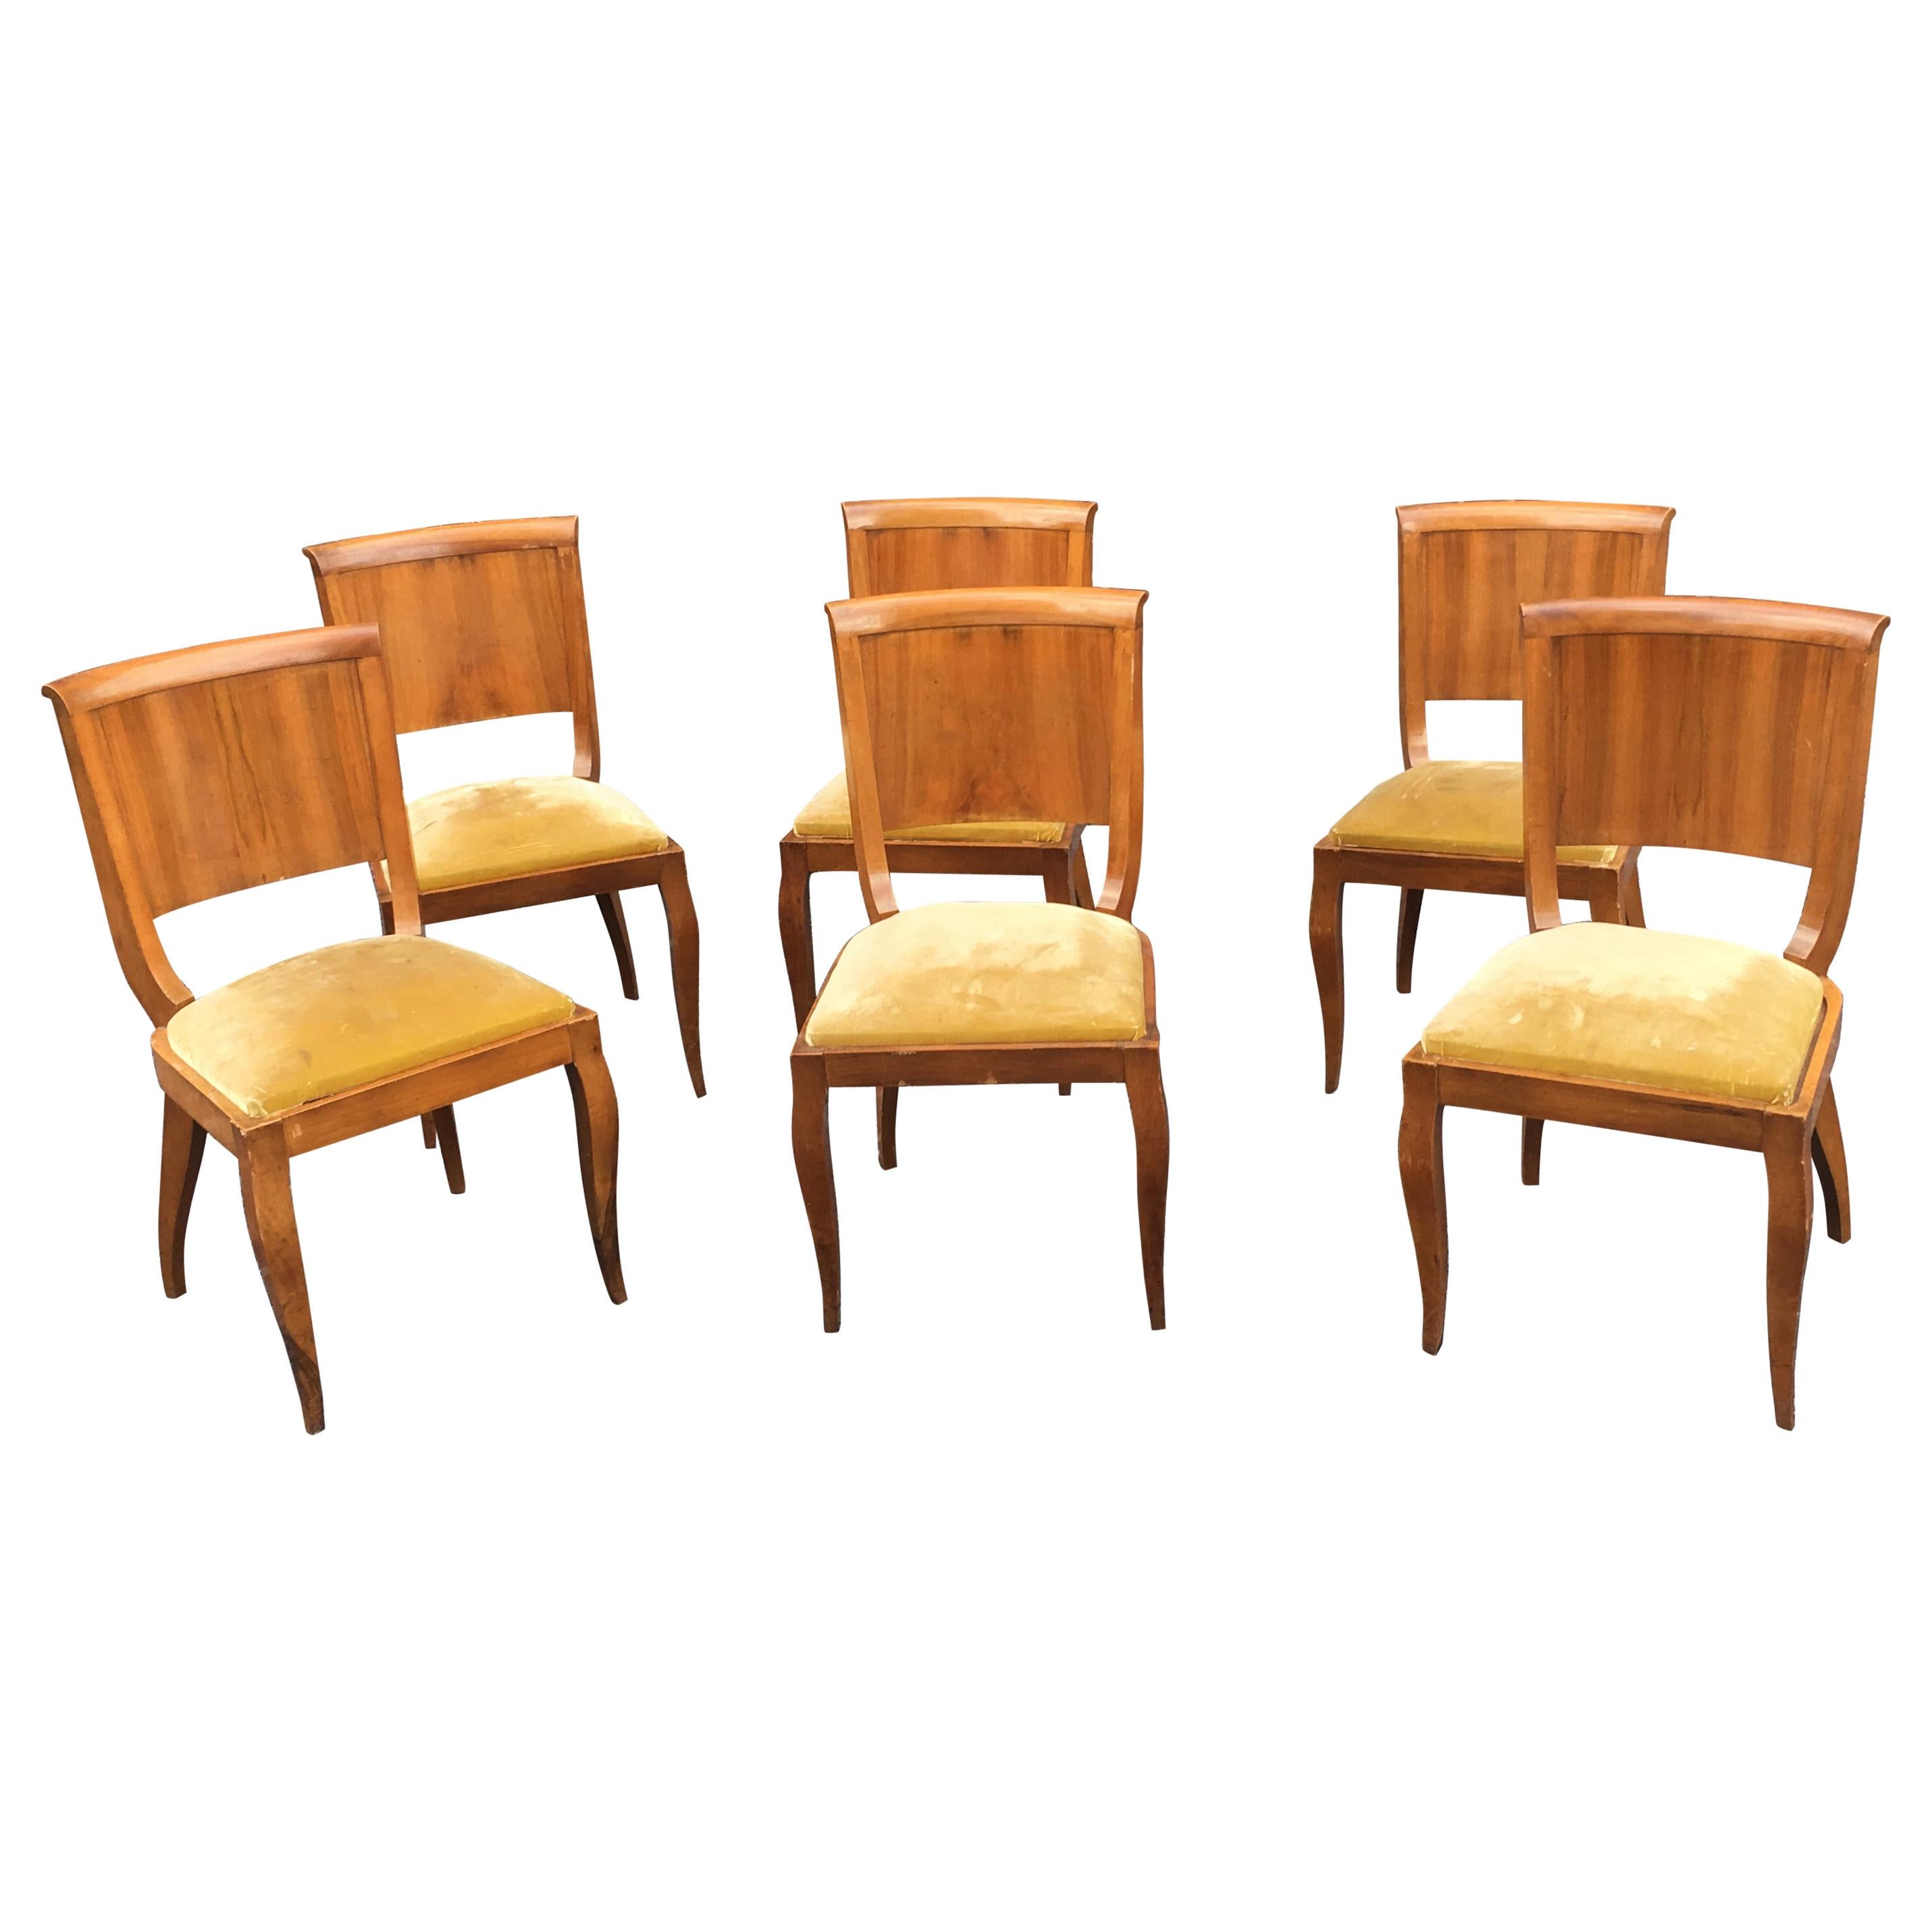 Suite of 6 Art Deco Chairs in Walnut and Walnut Veneer, circa 1930